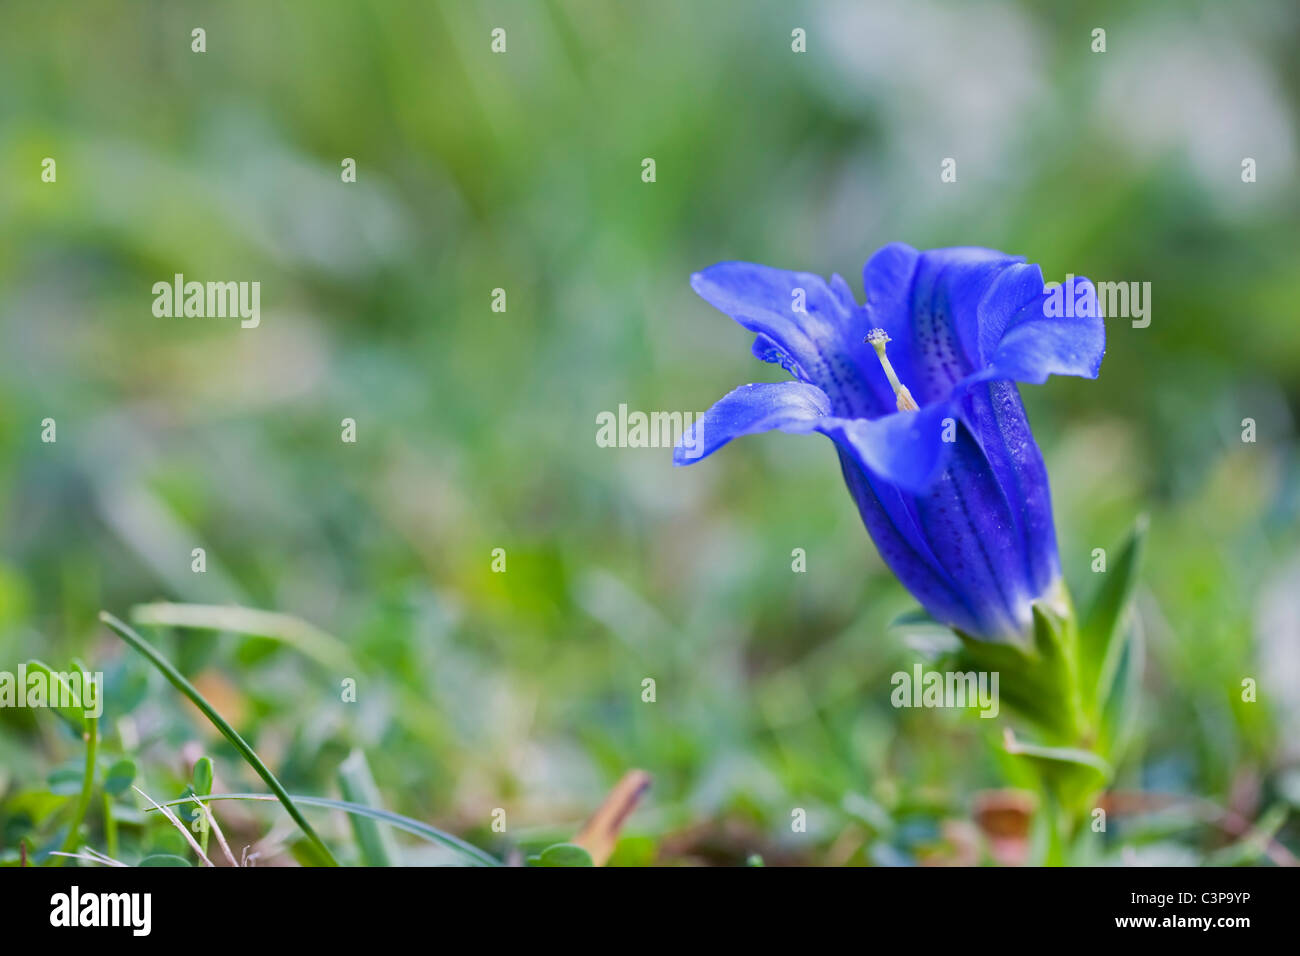 Germany, Bavaria, Enzian flower, close-up Stock Photo